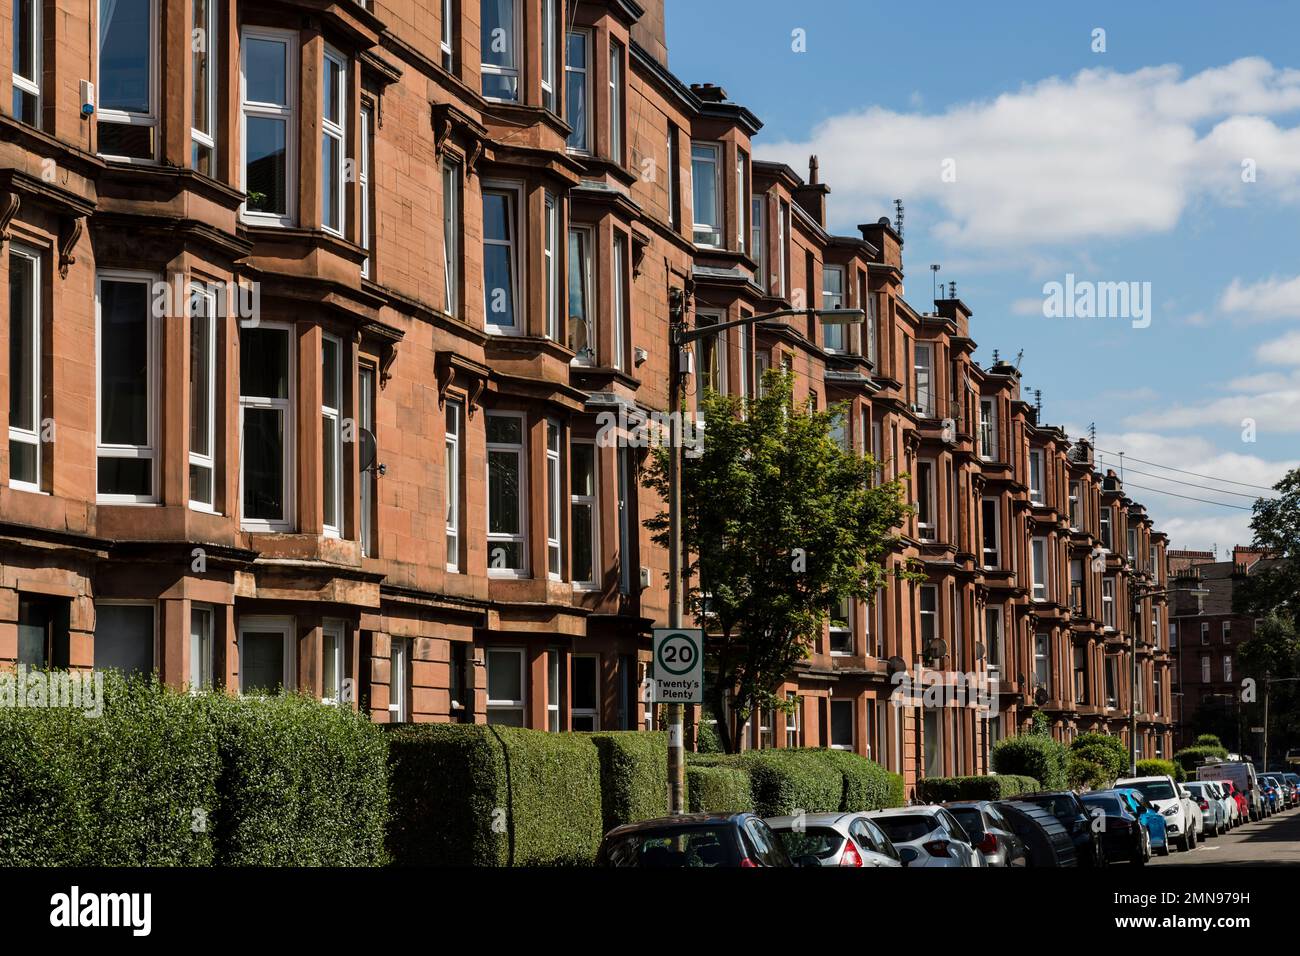 Tenement housing in Shawlands, Glasgow, Scotland, UK, Europe Stock Photo